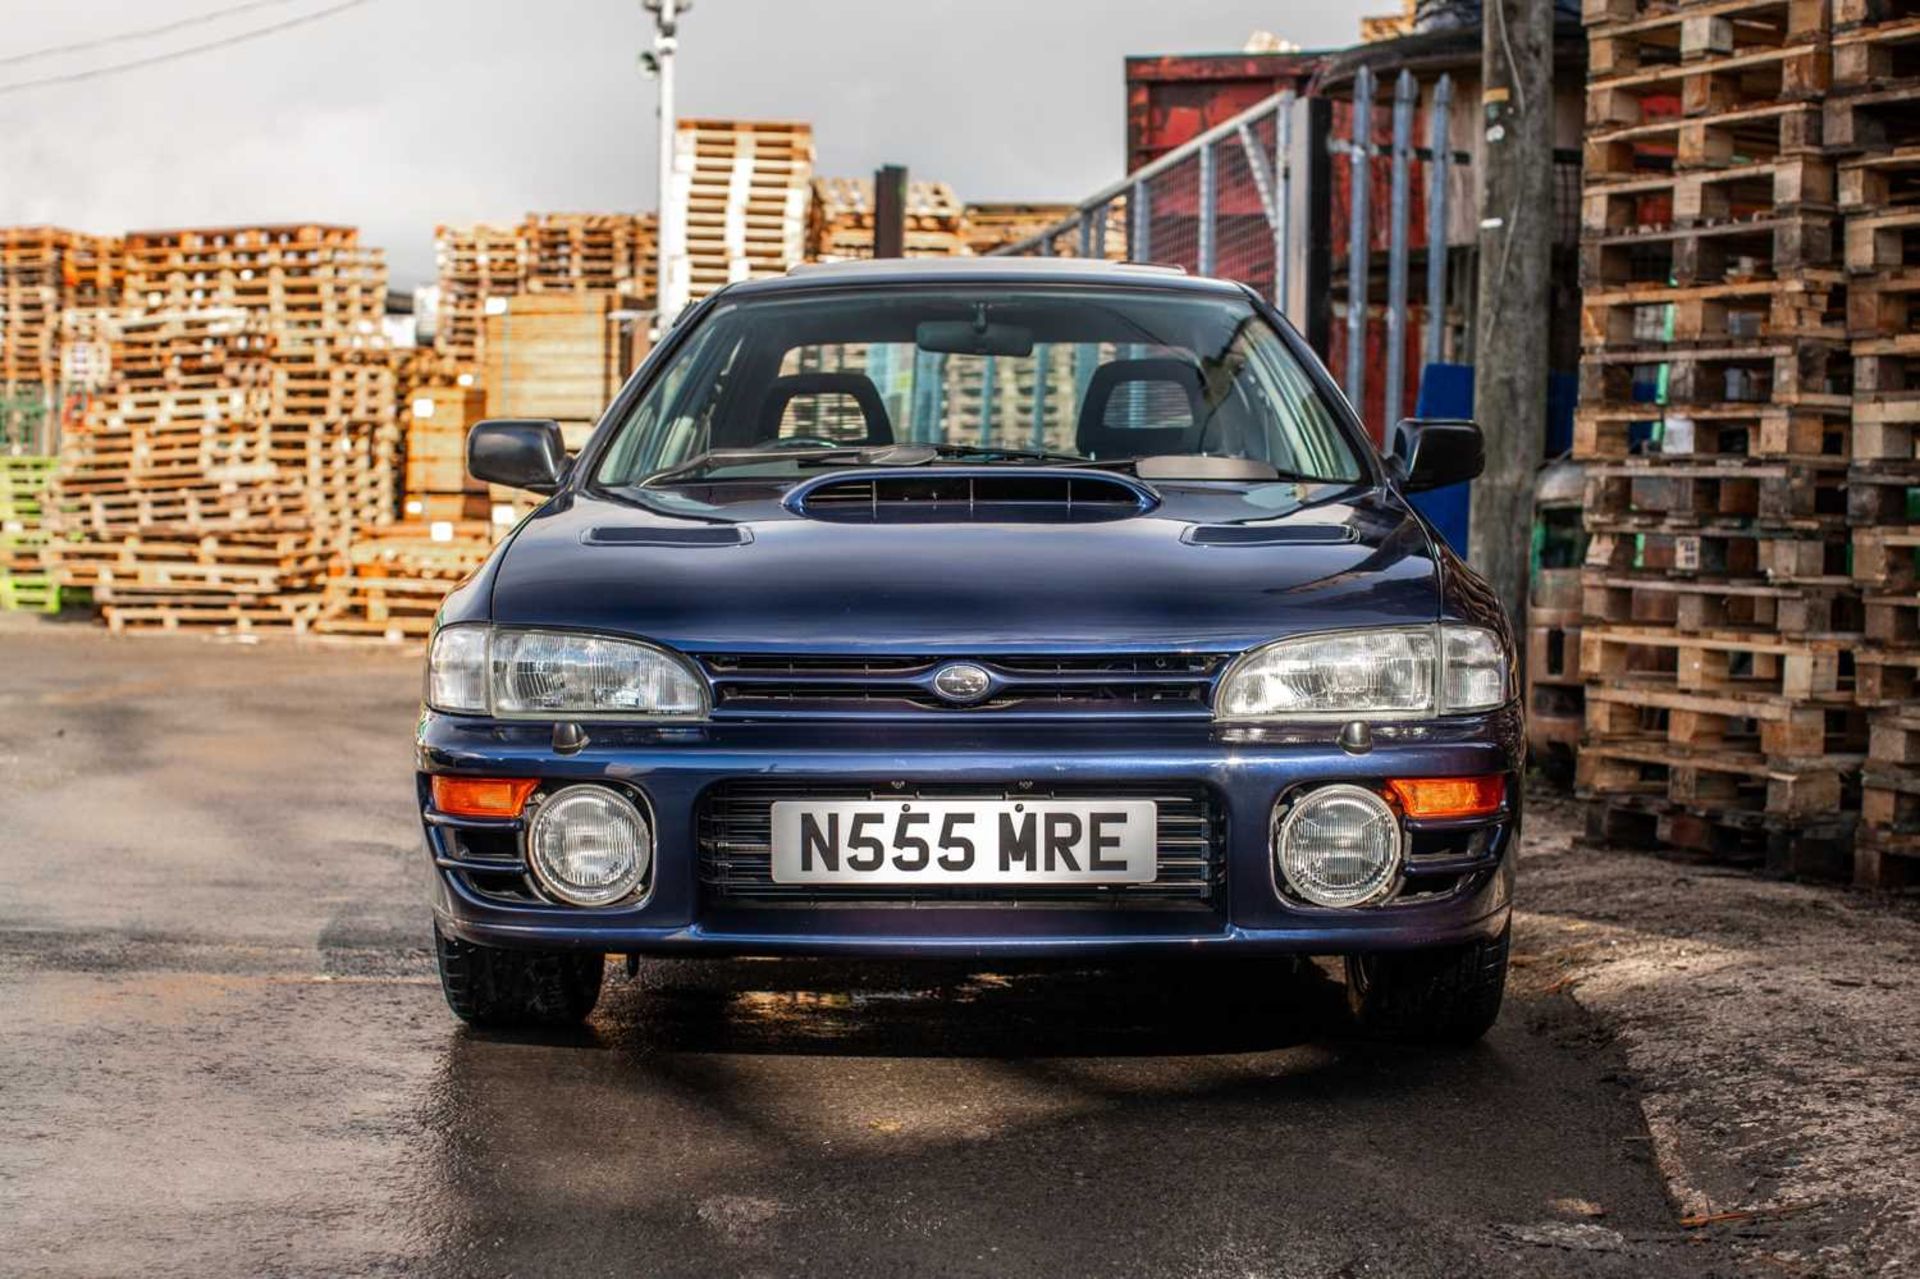 1995 Subaru Impreza Series McRae ***NO RESERVE*** Number 005 of 200 examples prepared by Prodrive - Image 9 of 118